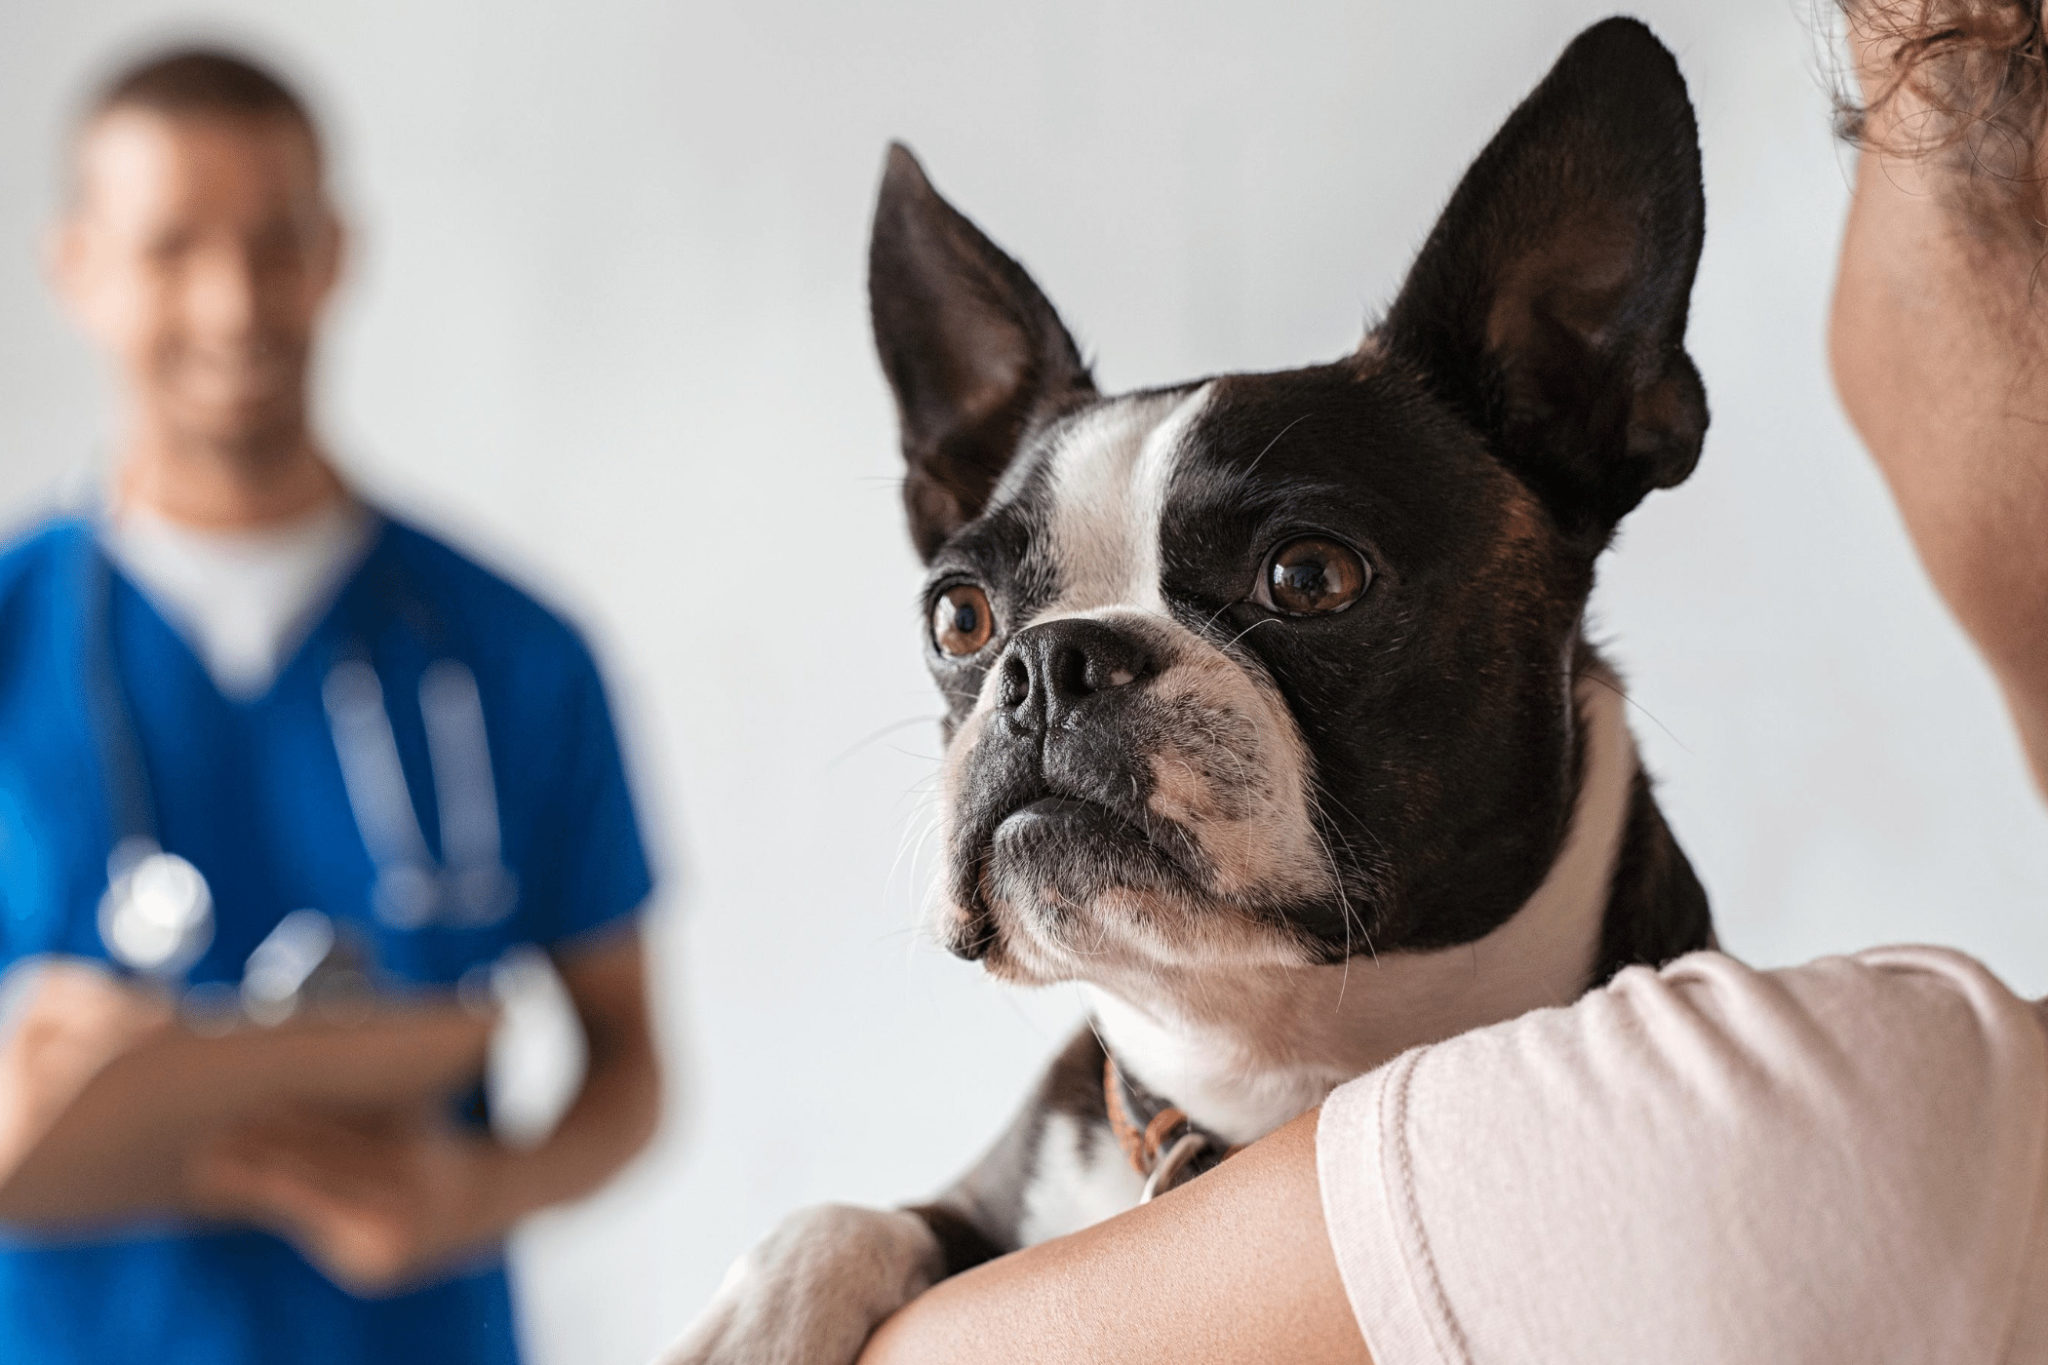 Niereninsuffizienz beim Hund erkennen HundefutterVergleich24.de